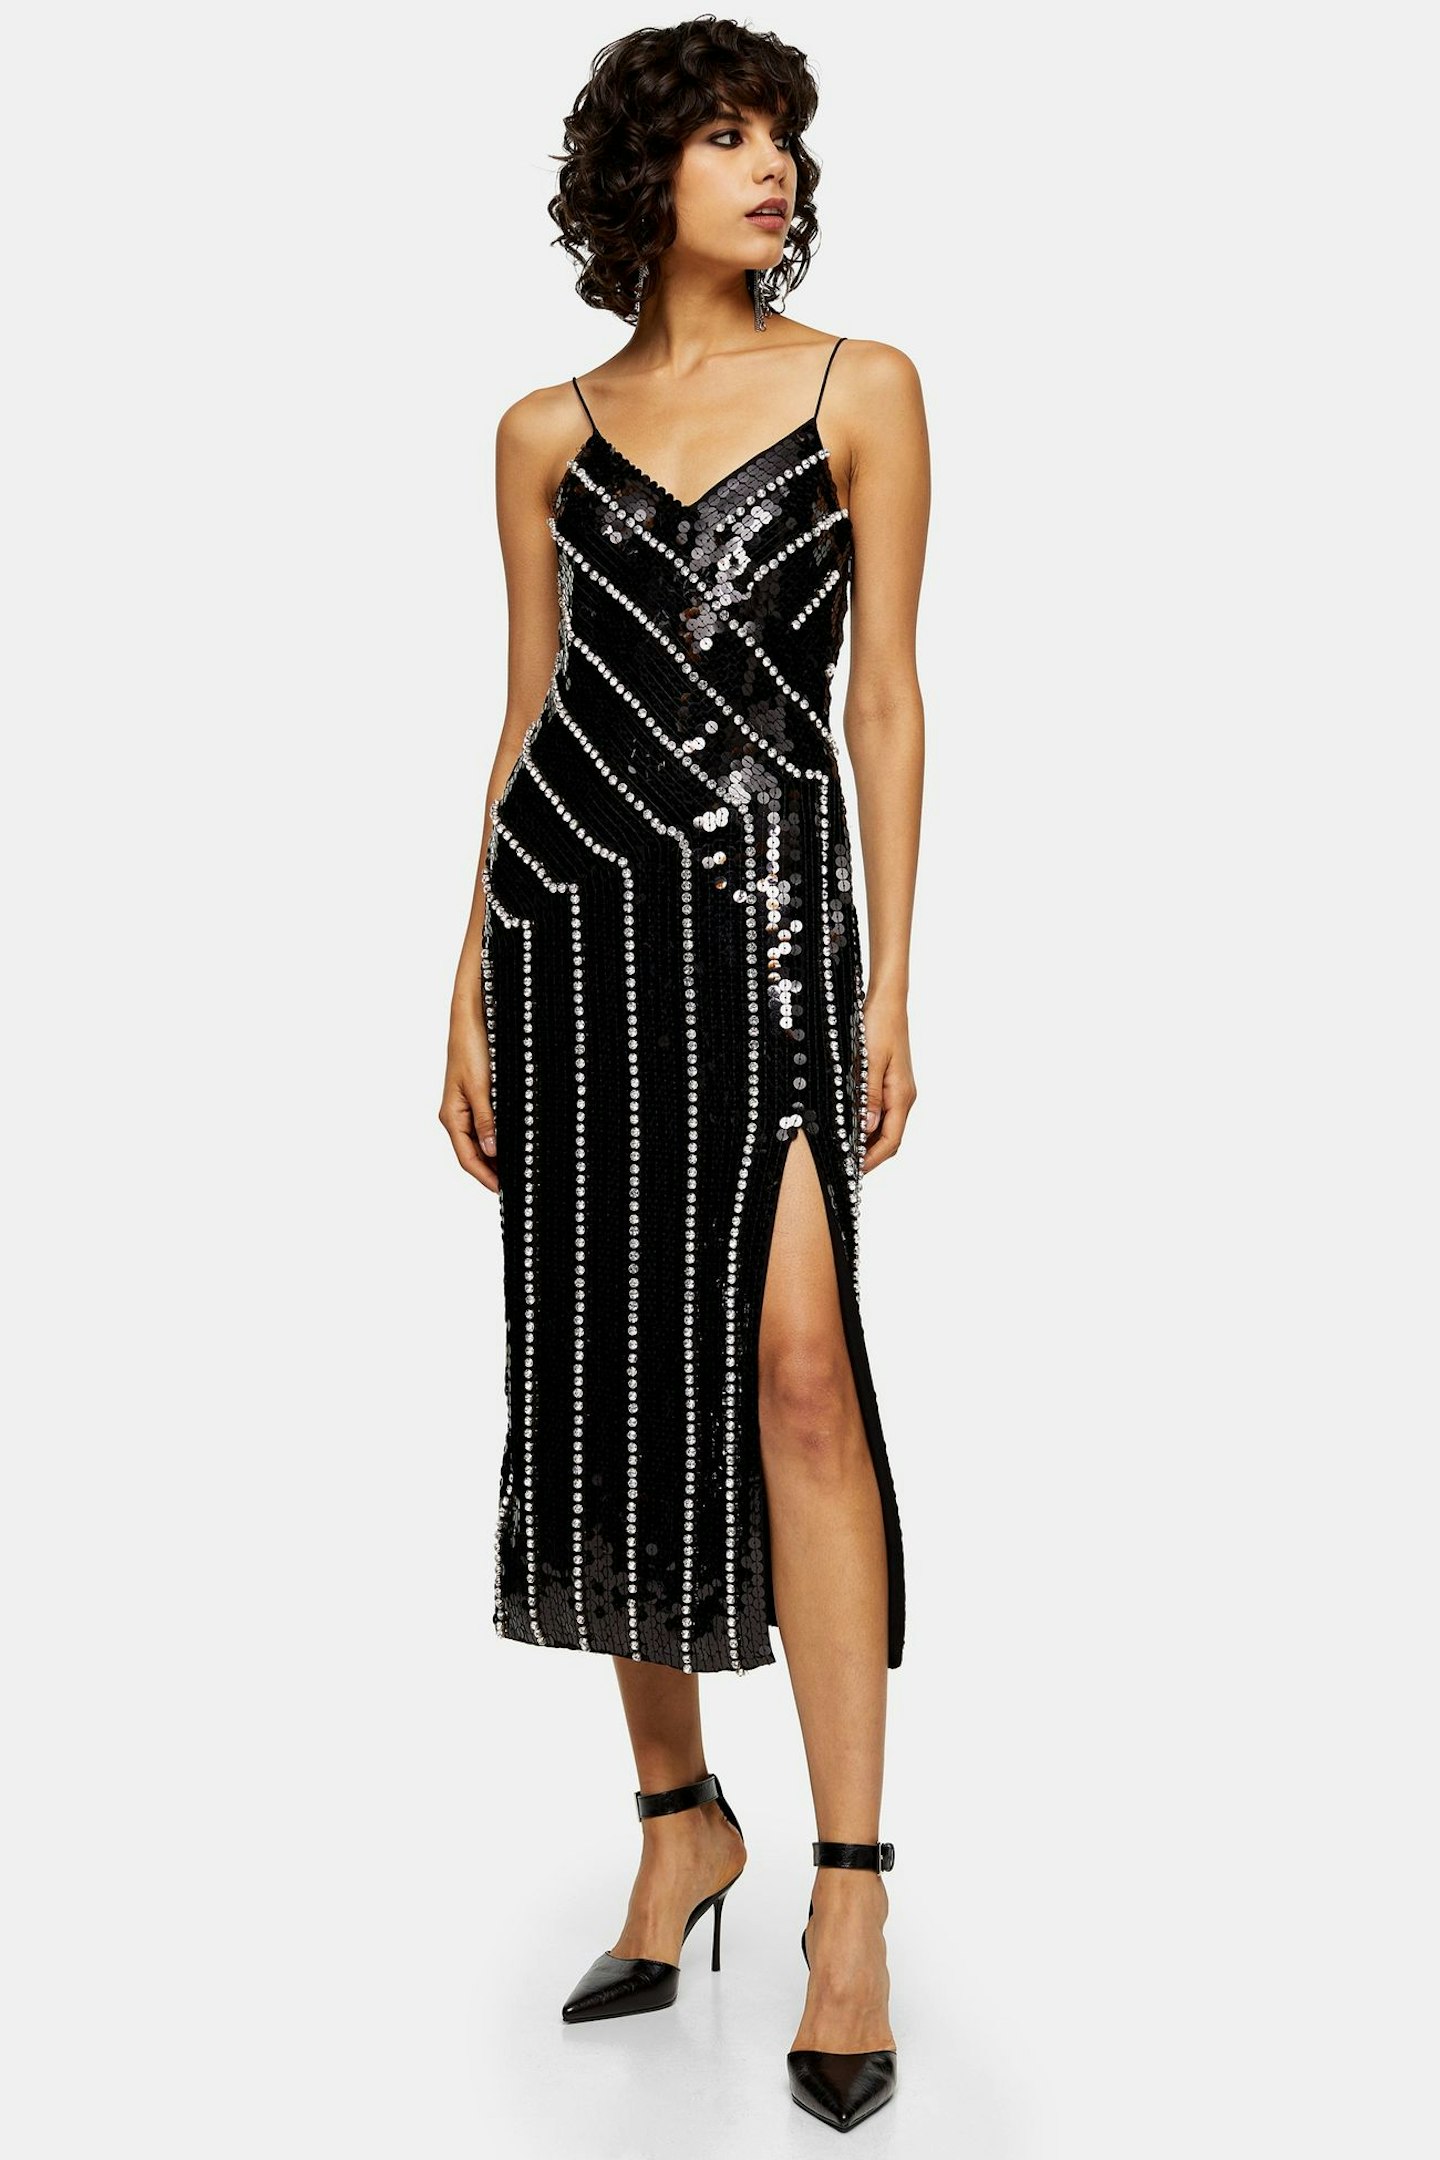 Topshop, Black Diamante Embroidered Midi Dress, £150